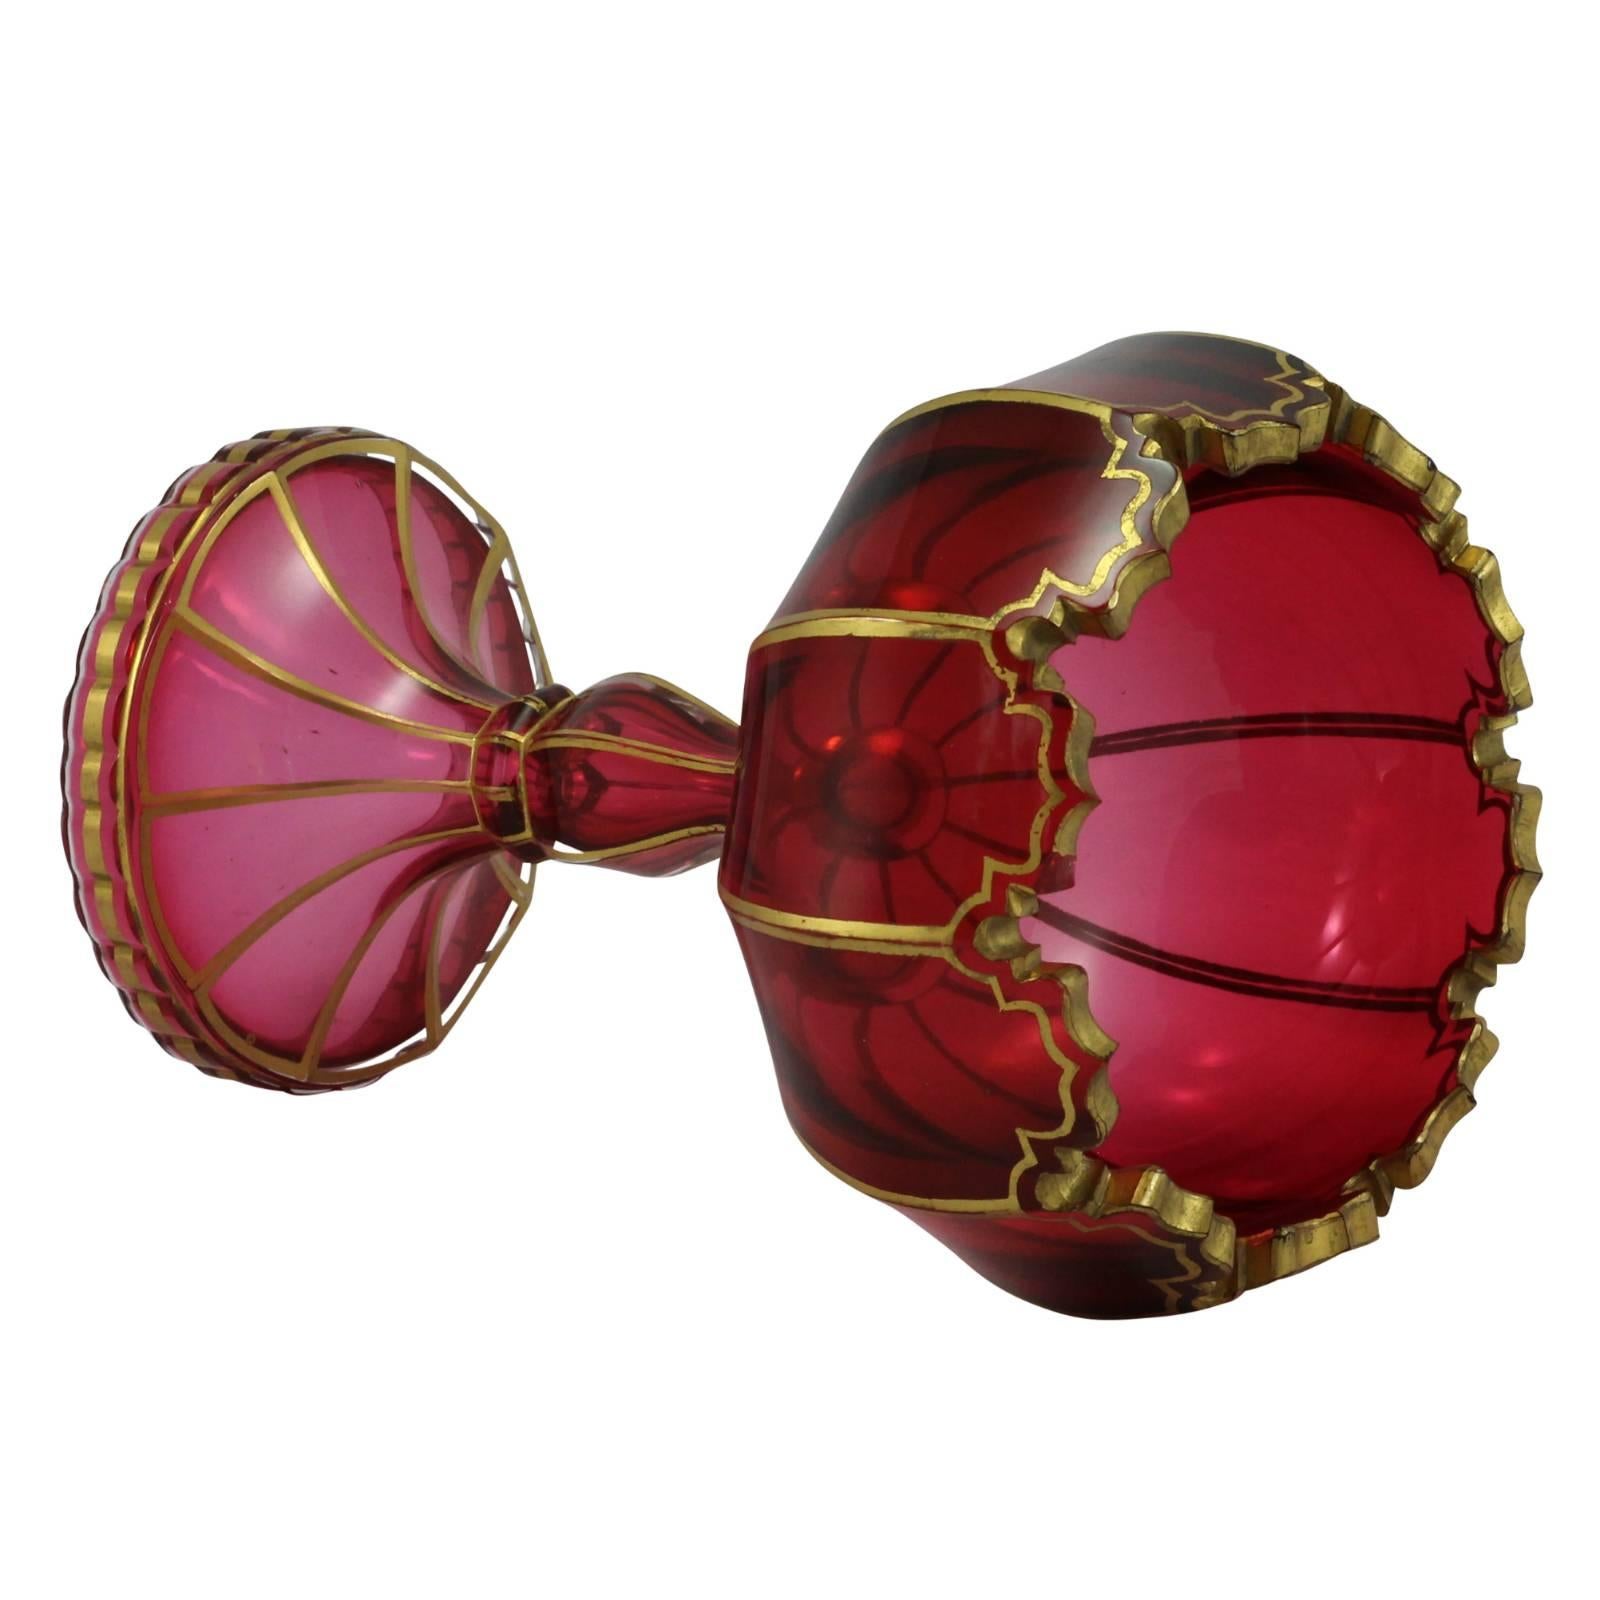 Bohemian 19th Century European Gilt Ruby Glass Compote